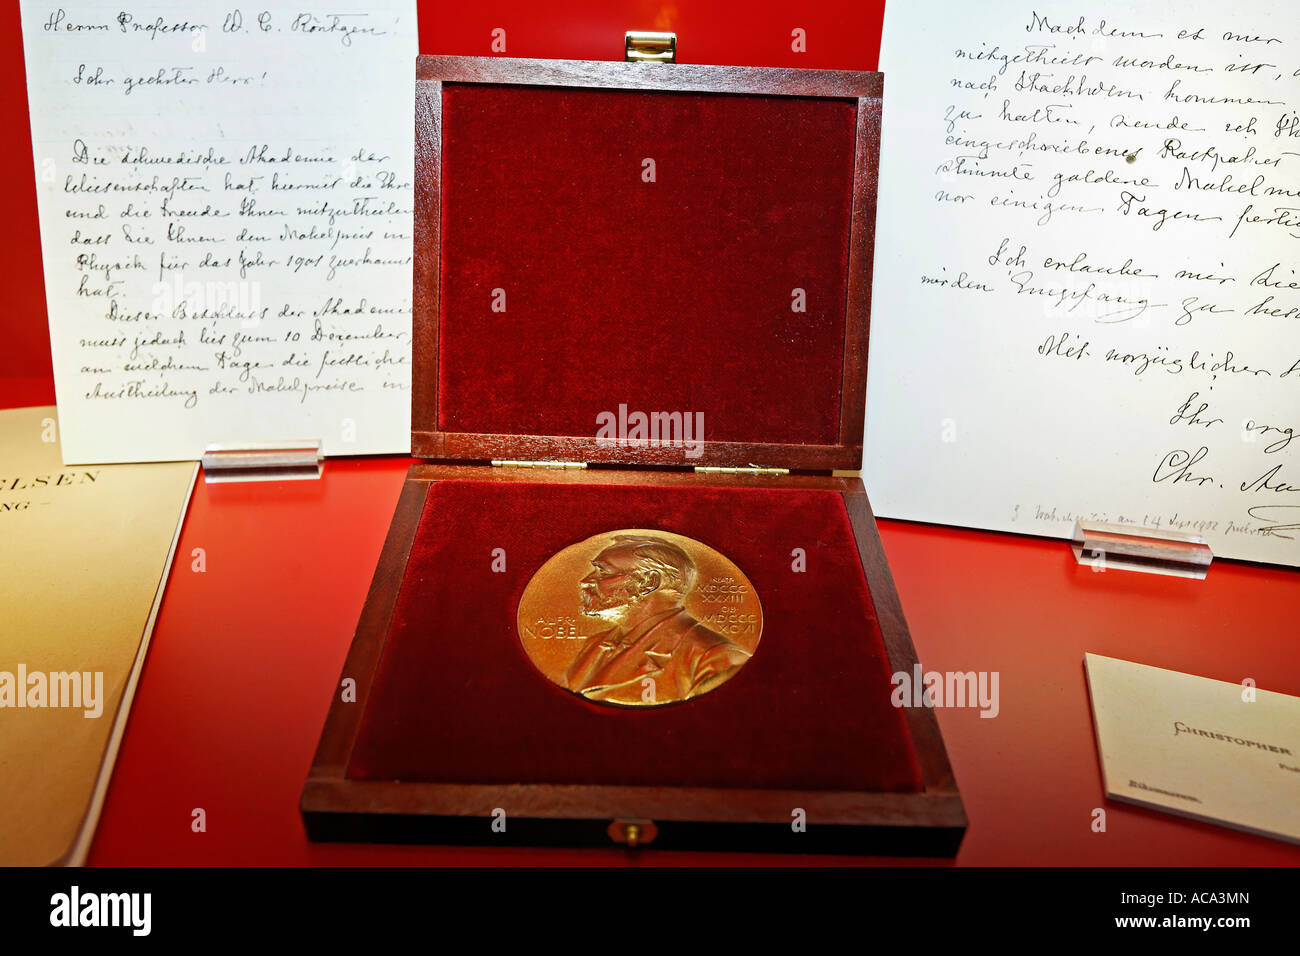 Nobel Prize Medal and letter to professor Roentgen, exhibit at German Roentgen Museum, Remscheid-Lennep, Germany Stock Photo